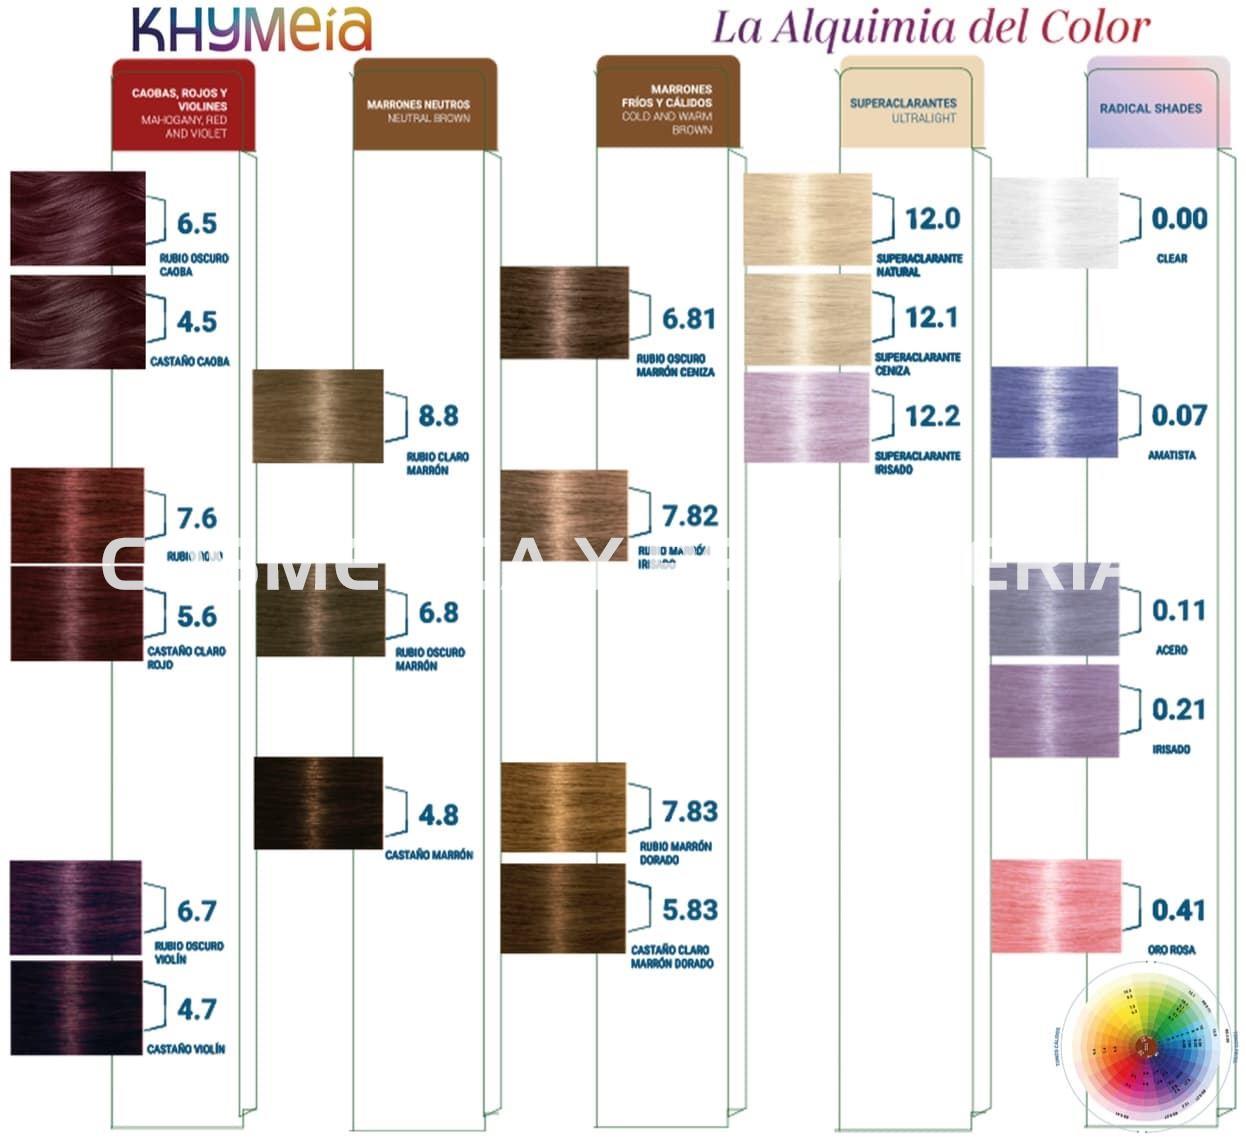 Tinte Khymeía color 4.5 - Imagen 2